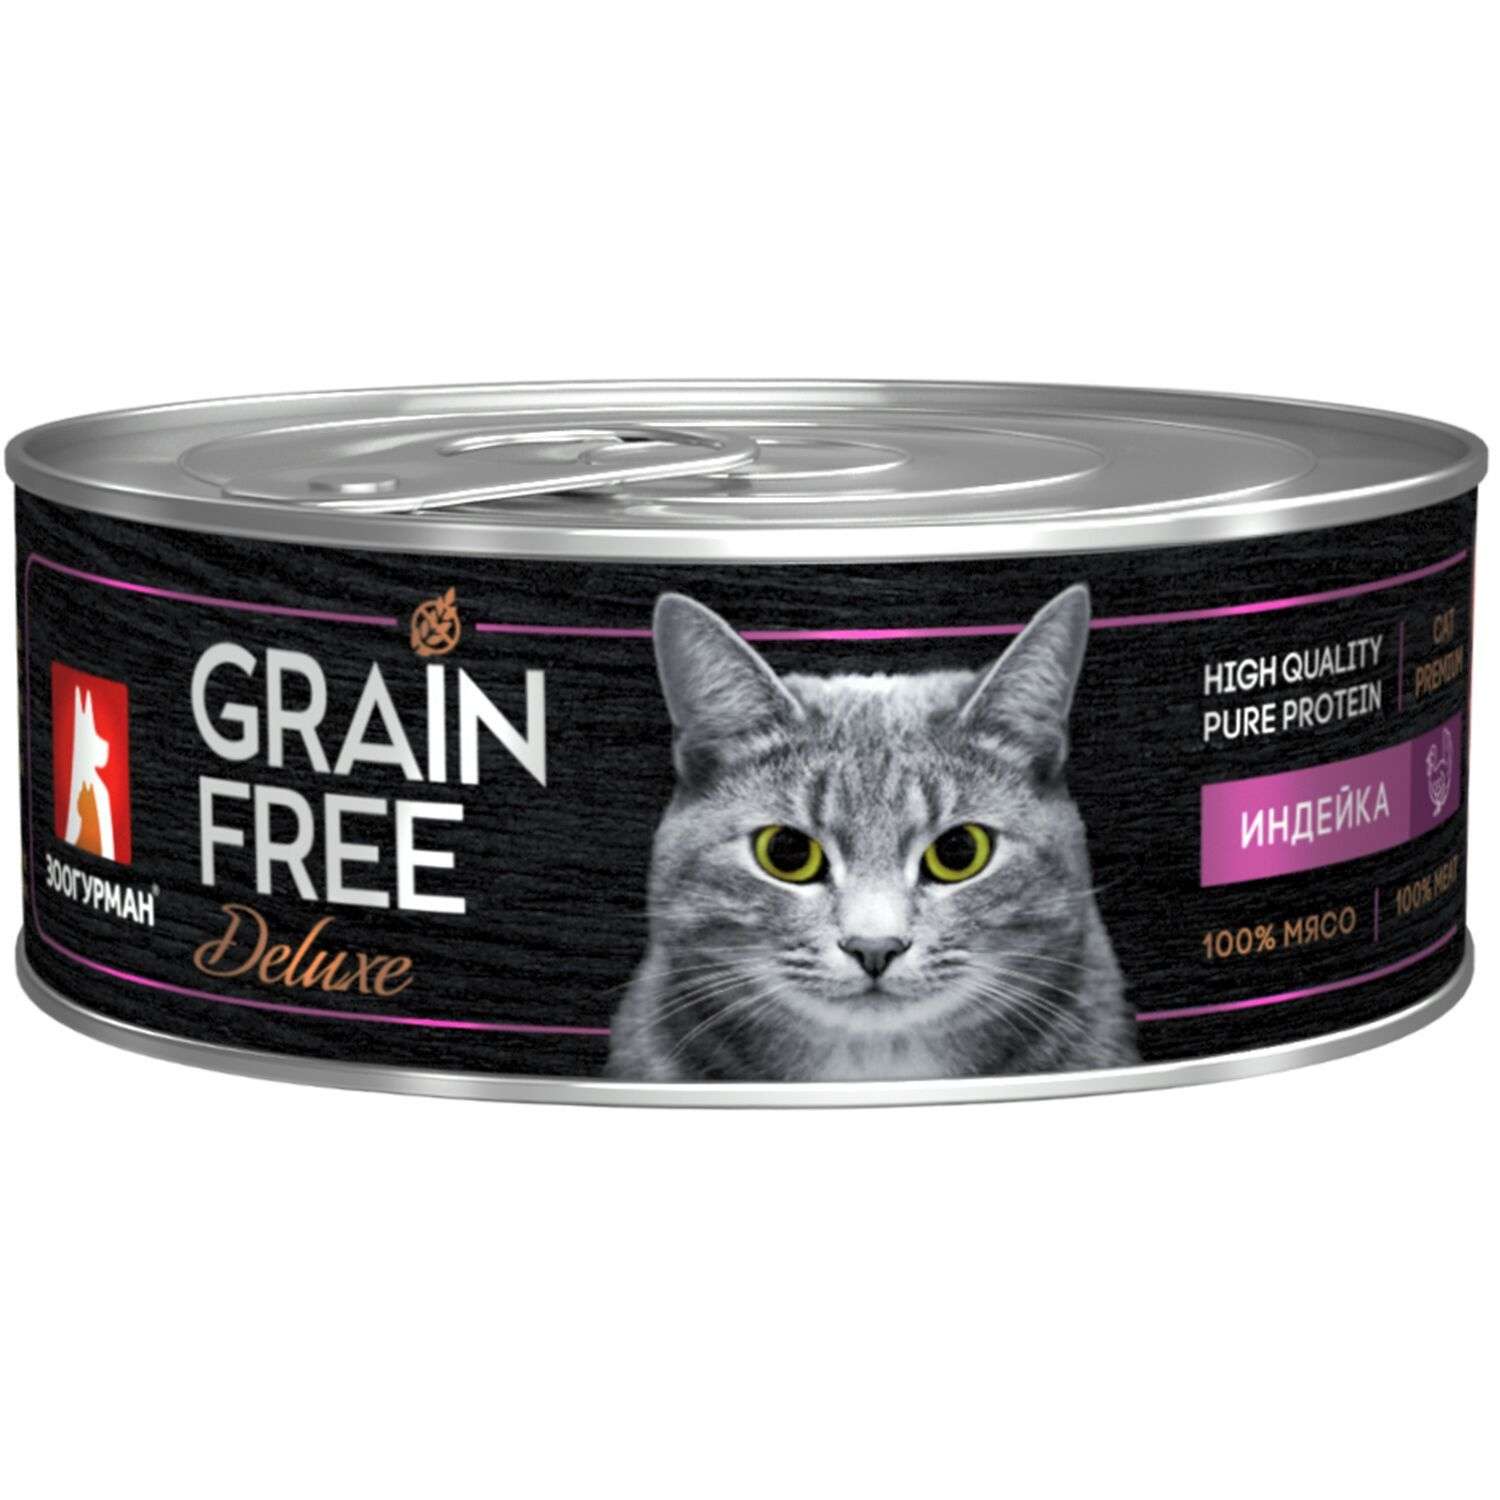 Корм влажный для кошек Зоогурман 100г Grain free индейка консервированный - фото 2